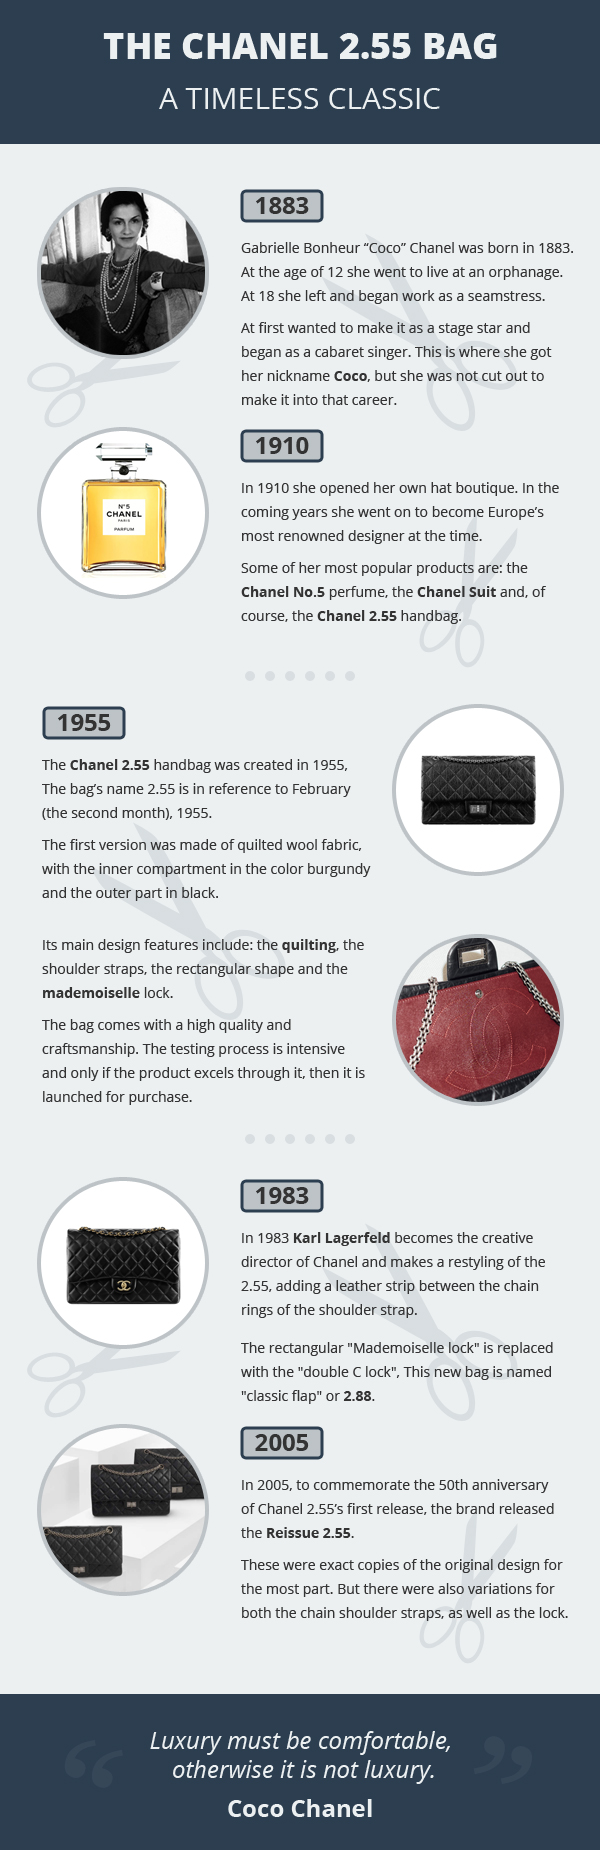 History of the Chanel 2.55 Handbag